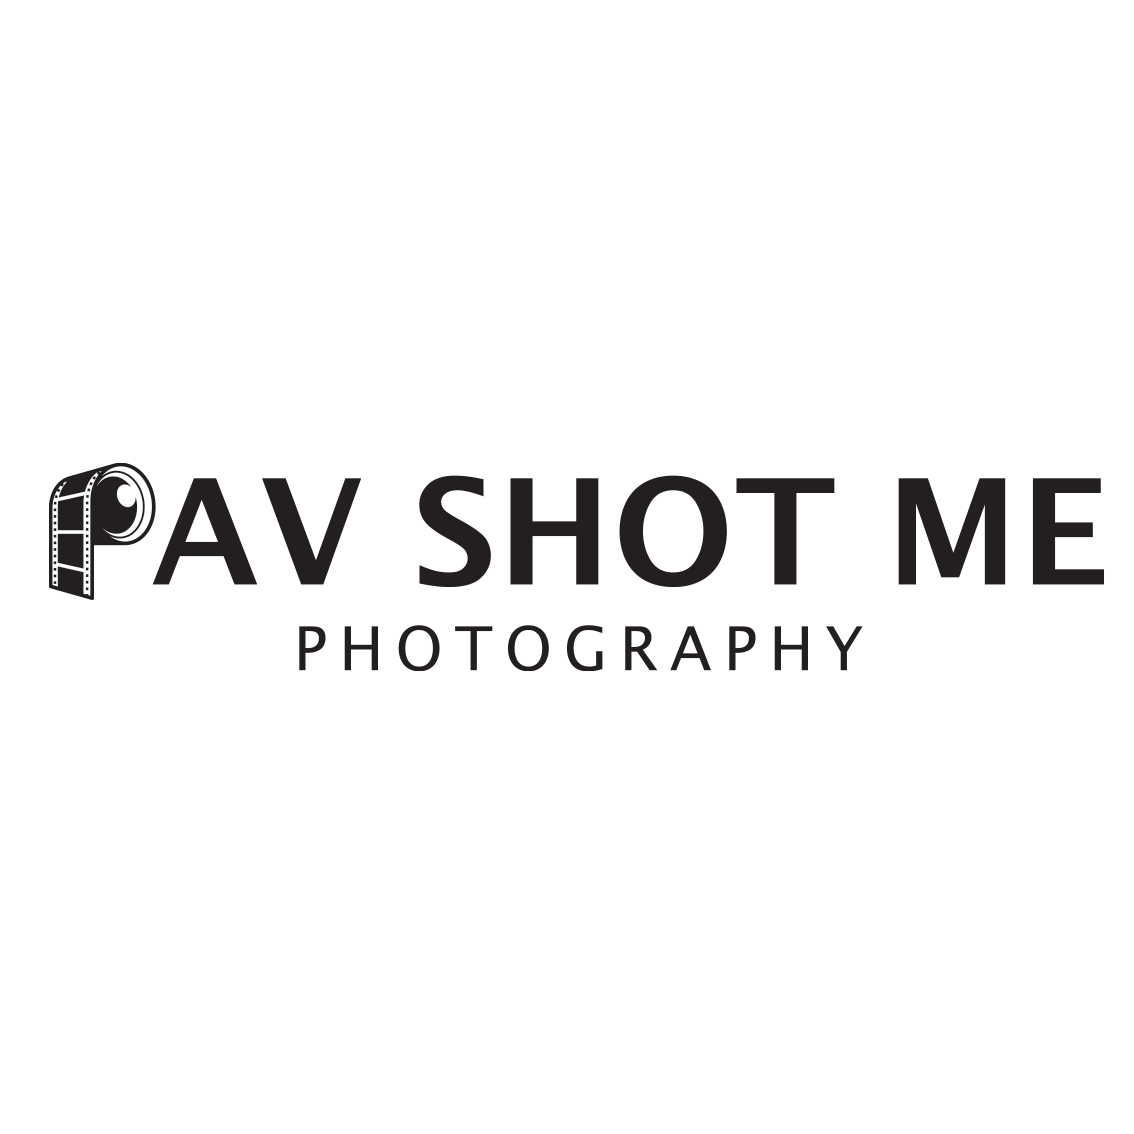 Pav Shot Me Photography